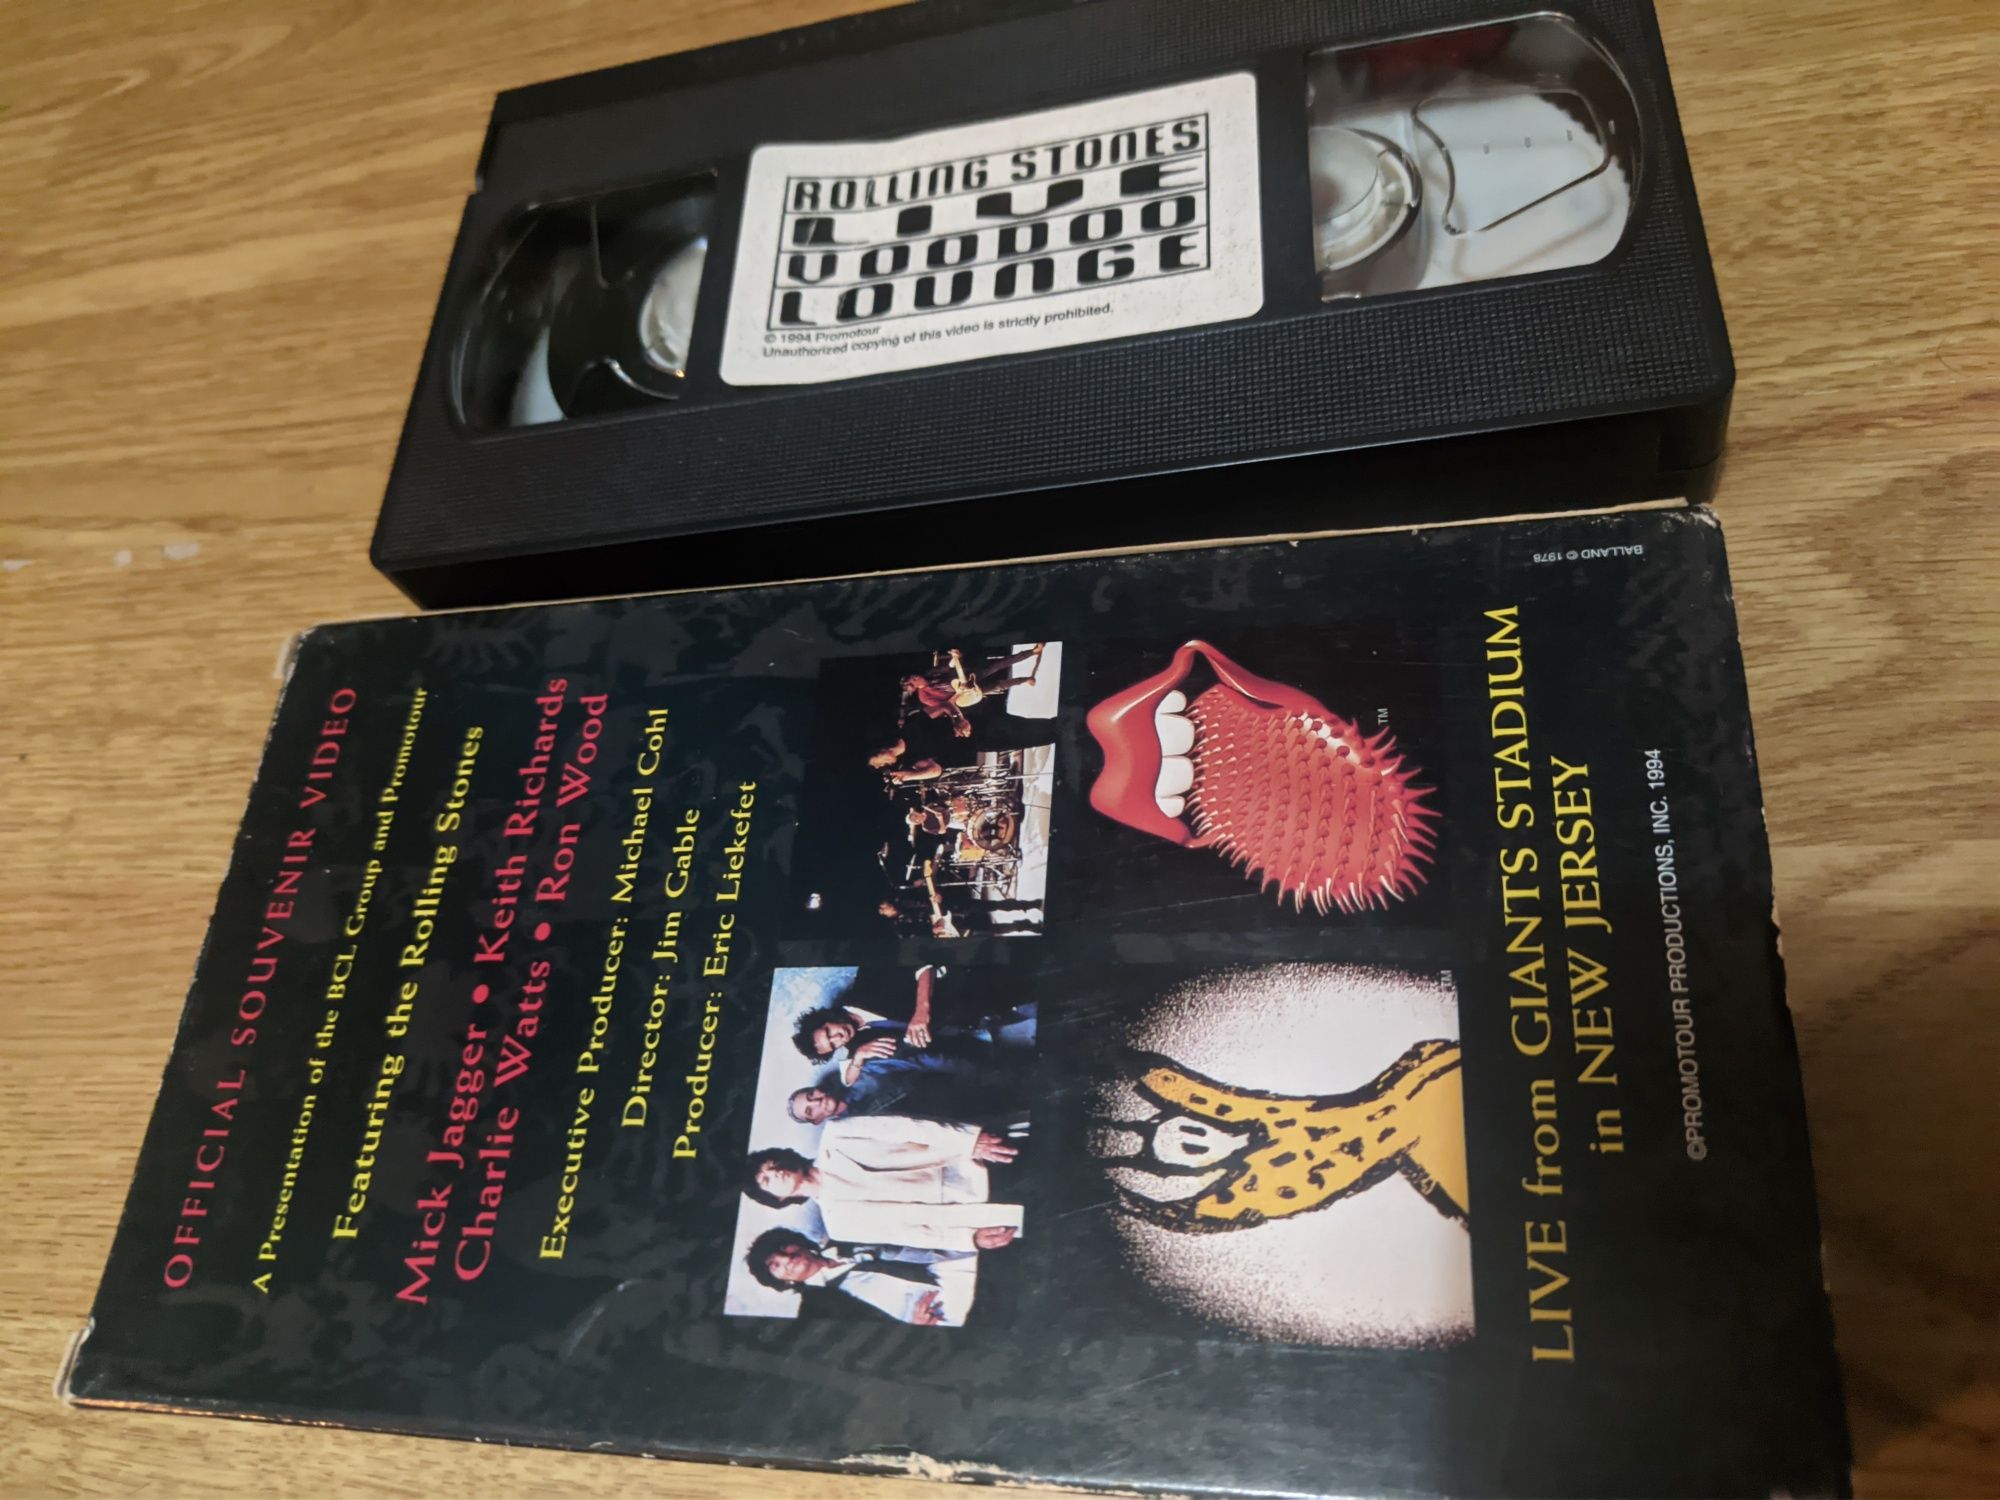 Cassete VHS rolling stones 1994